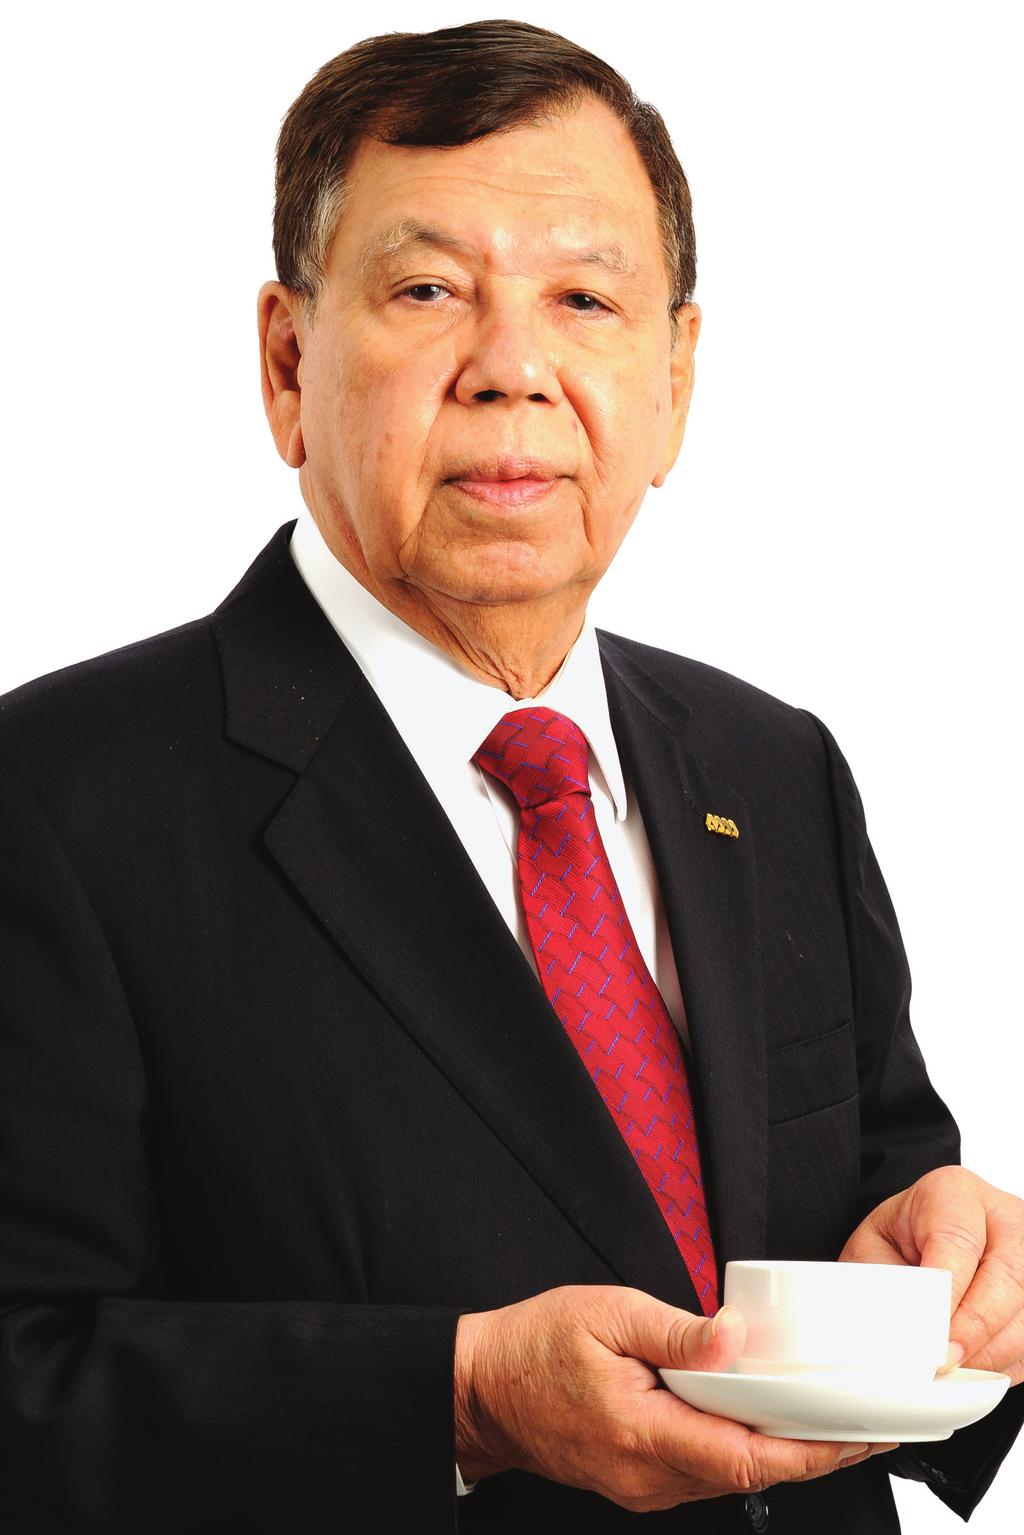 Tan Sri Datuk Seri Razman Md Hashim was appointed to the Board on 1 July 2006.